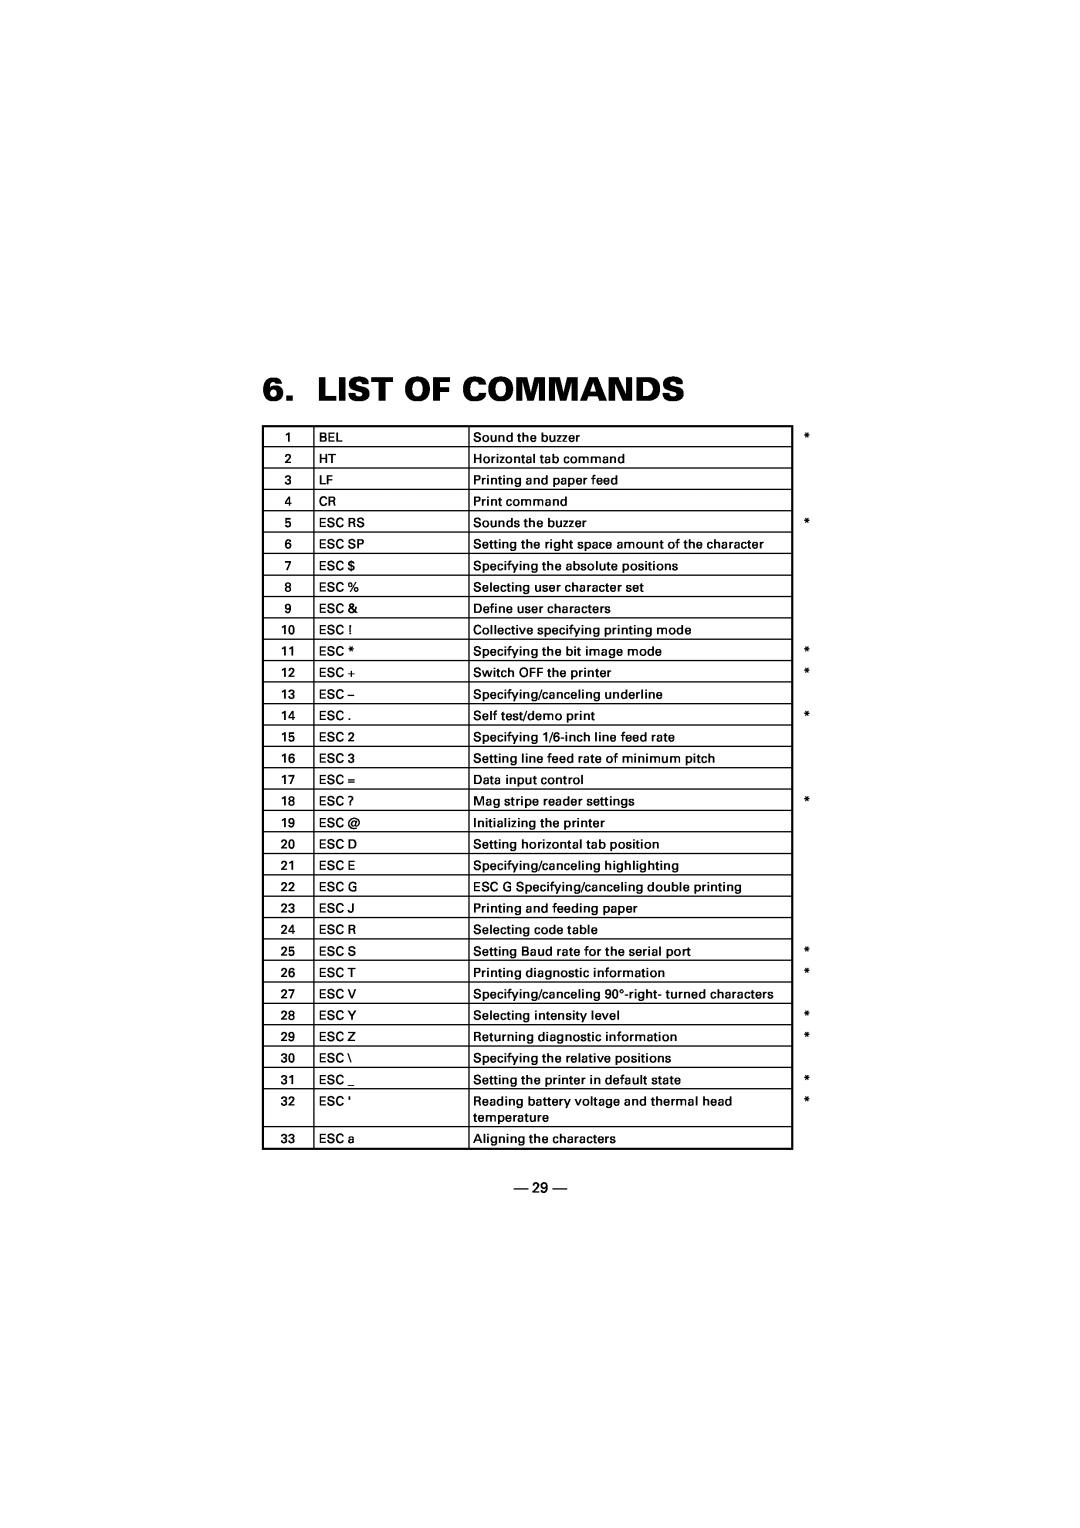 Citizen Systems CMP-10 manual List Of Commands 